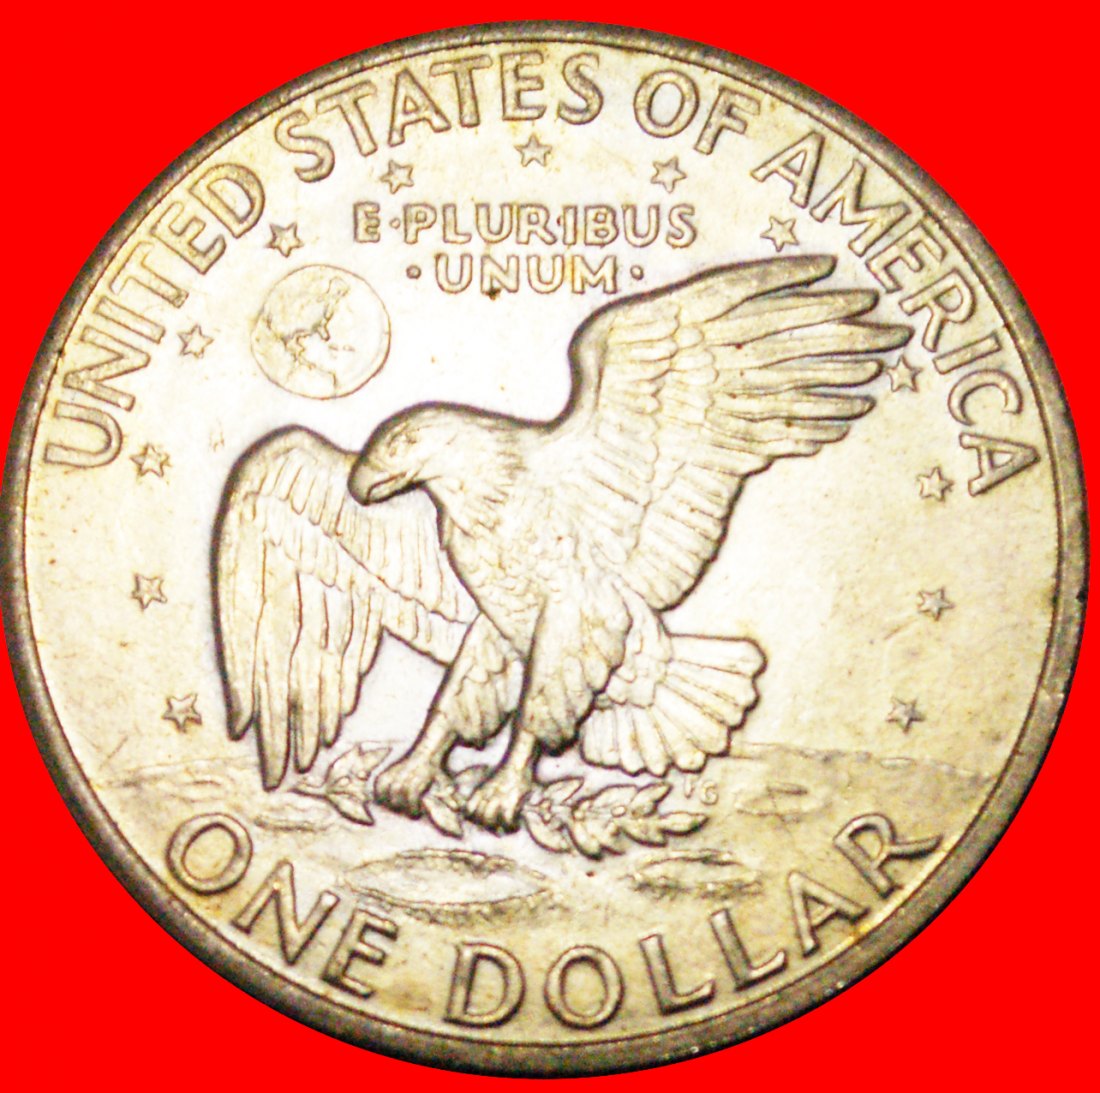  √ LUNAR DOLLAR (1971-1999): USA ★ 1 DOLLAR 1971D aUNC! LOW START★ NO RESERVE!!!   